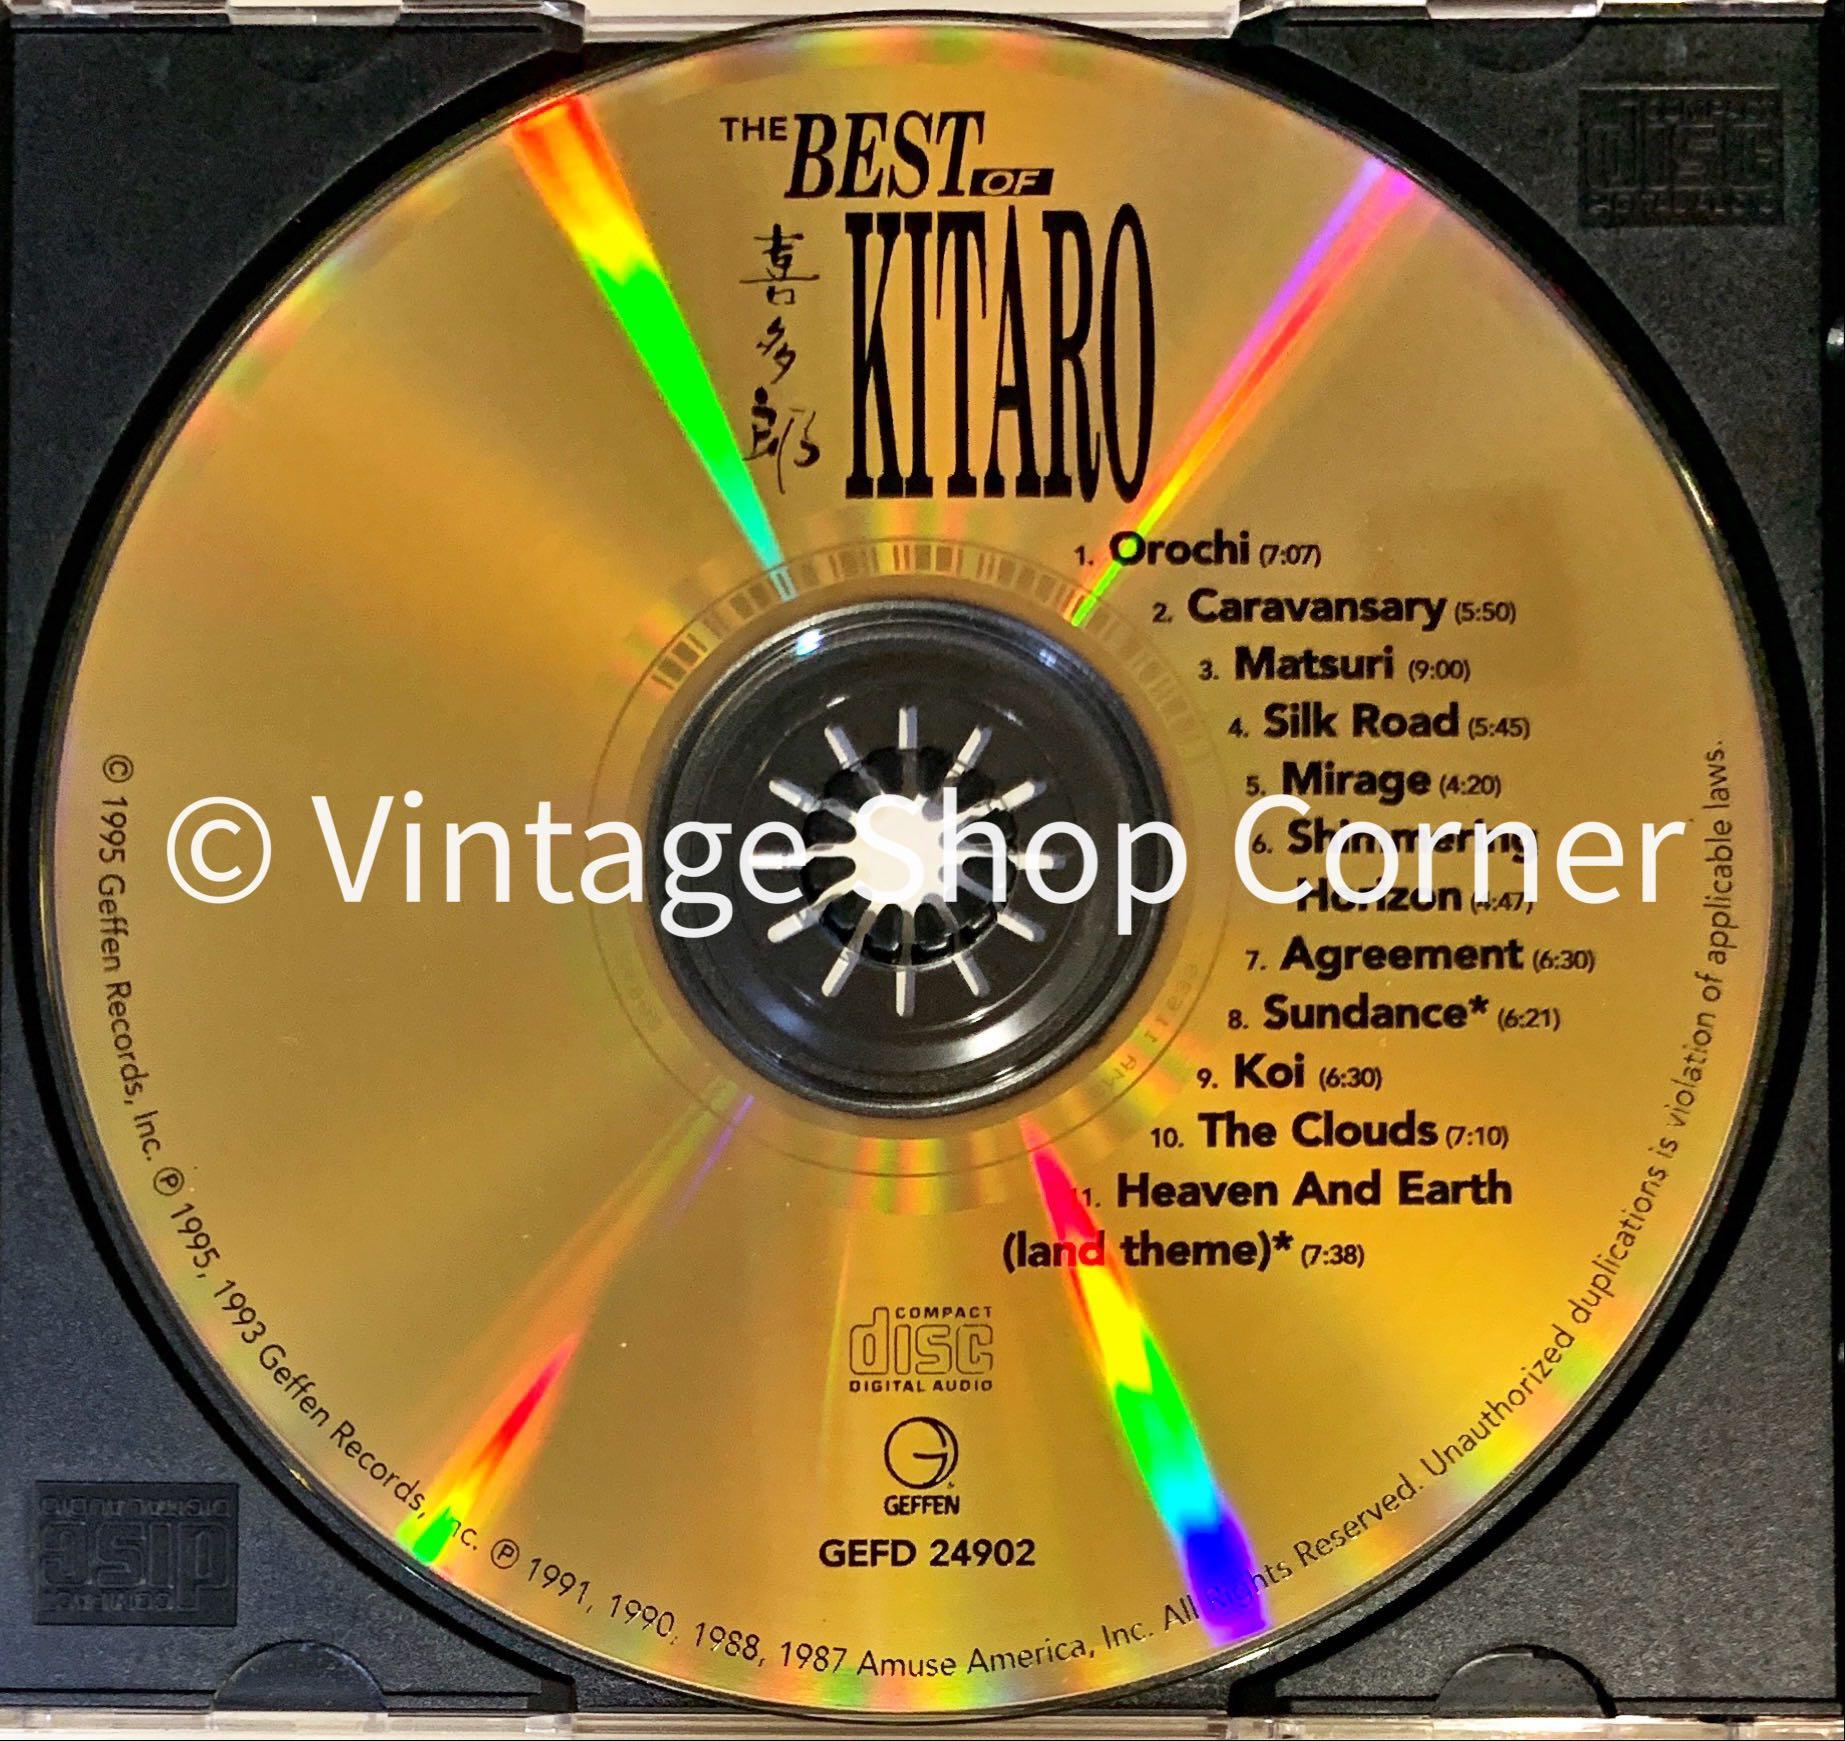 Best of Kitaro - Audio CD By Kitaro - GOOD 海外 即決 - スキル、知識